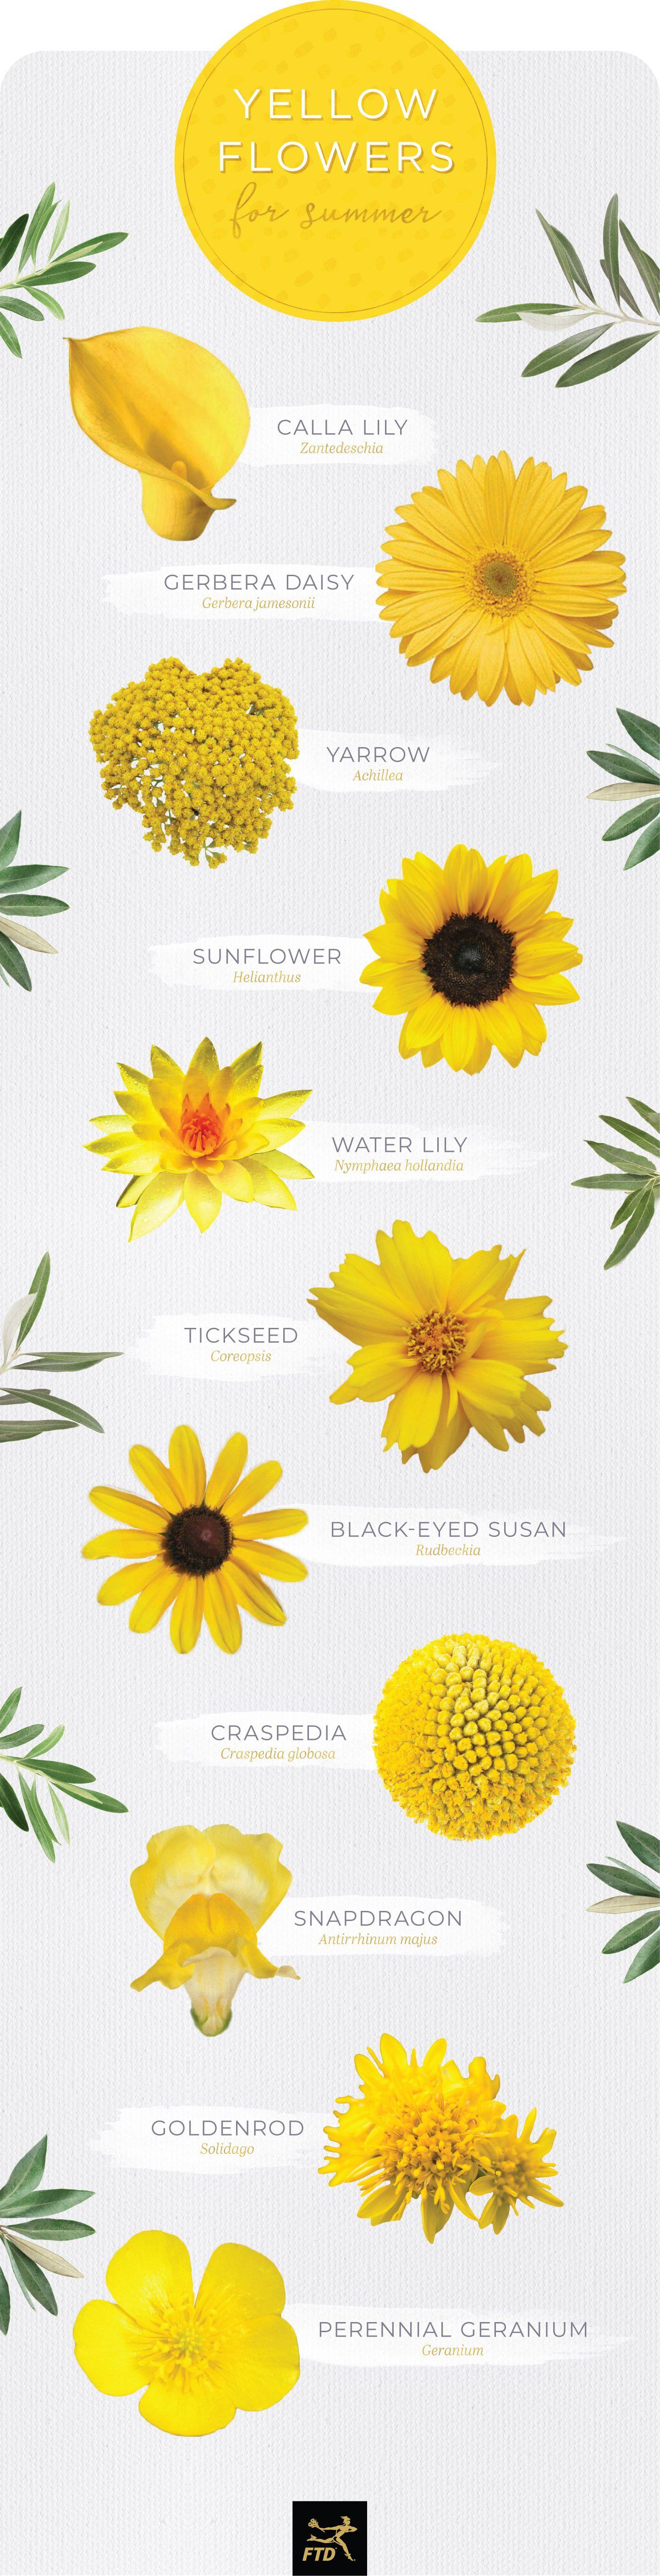 Big Yellow Flower Shaped Logo - Types of Yellow Flowers